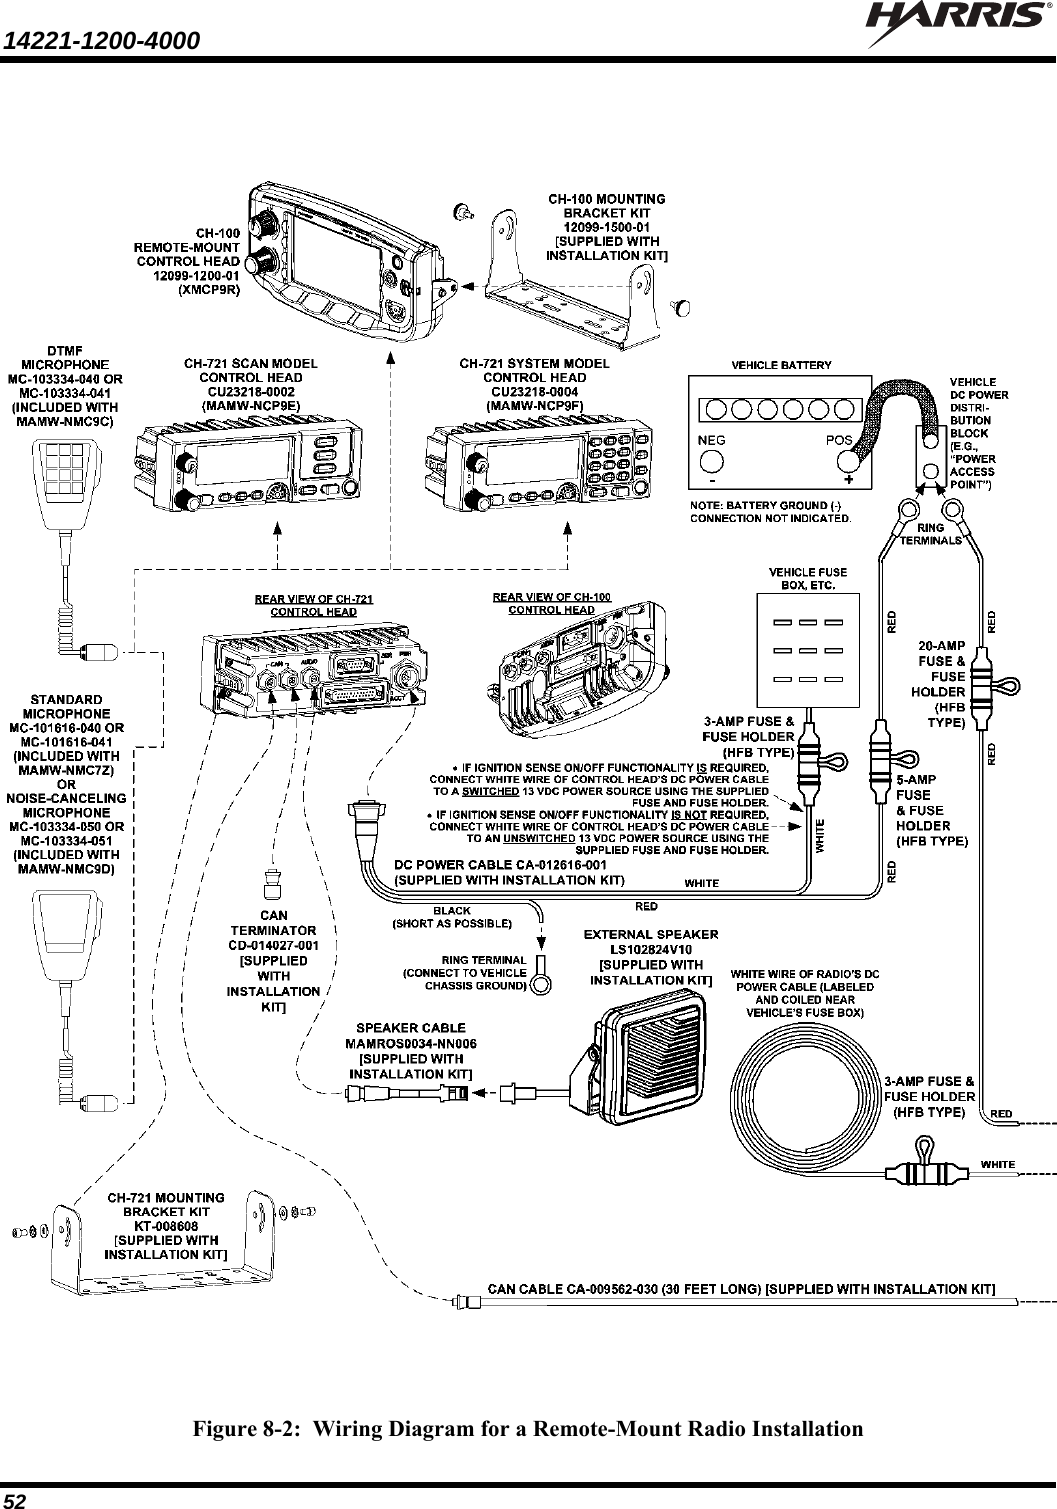 14221-1200-4000    52  Figure 8-2:  Wiring Diagram for a Remote-Mount Radio Installation 